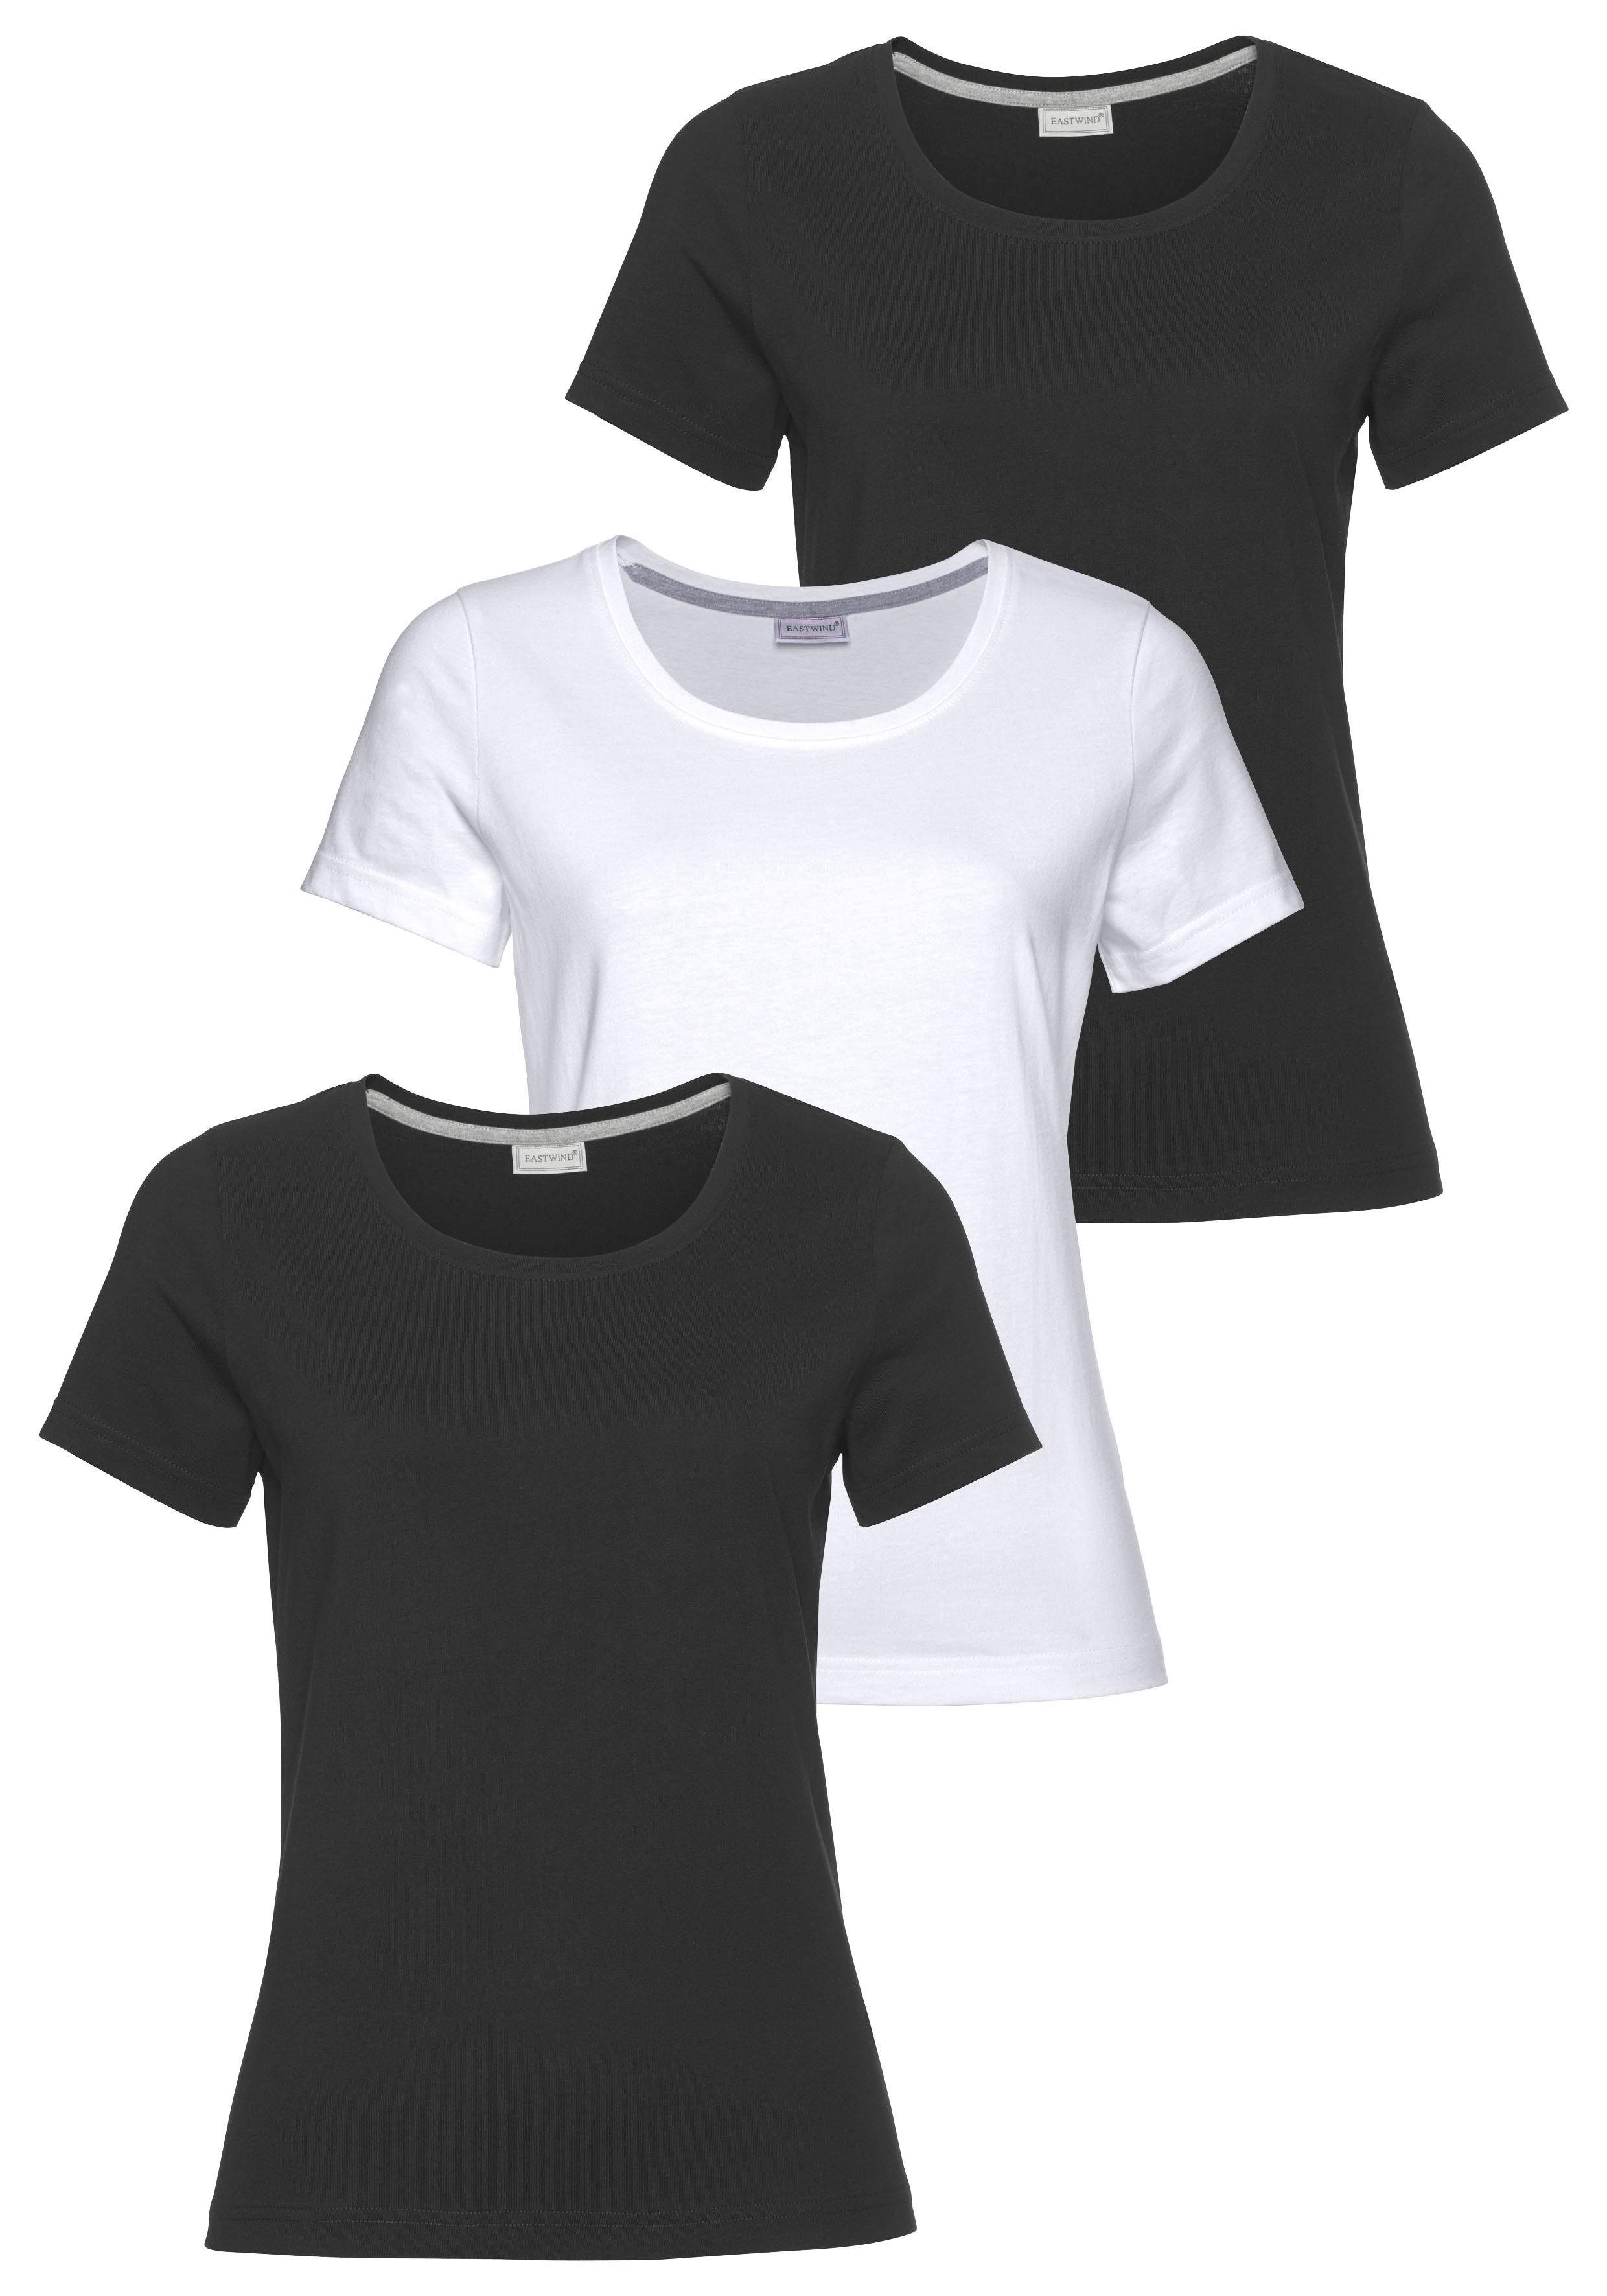 Eastwind T-Shirt (Spar-Set, 3er-Pack) schwarz, schwarz, weiß | Sport-T-Shirts